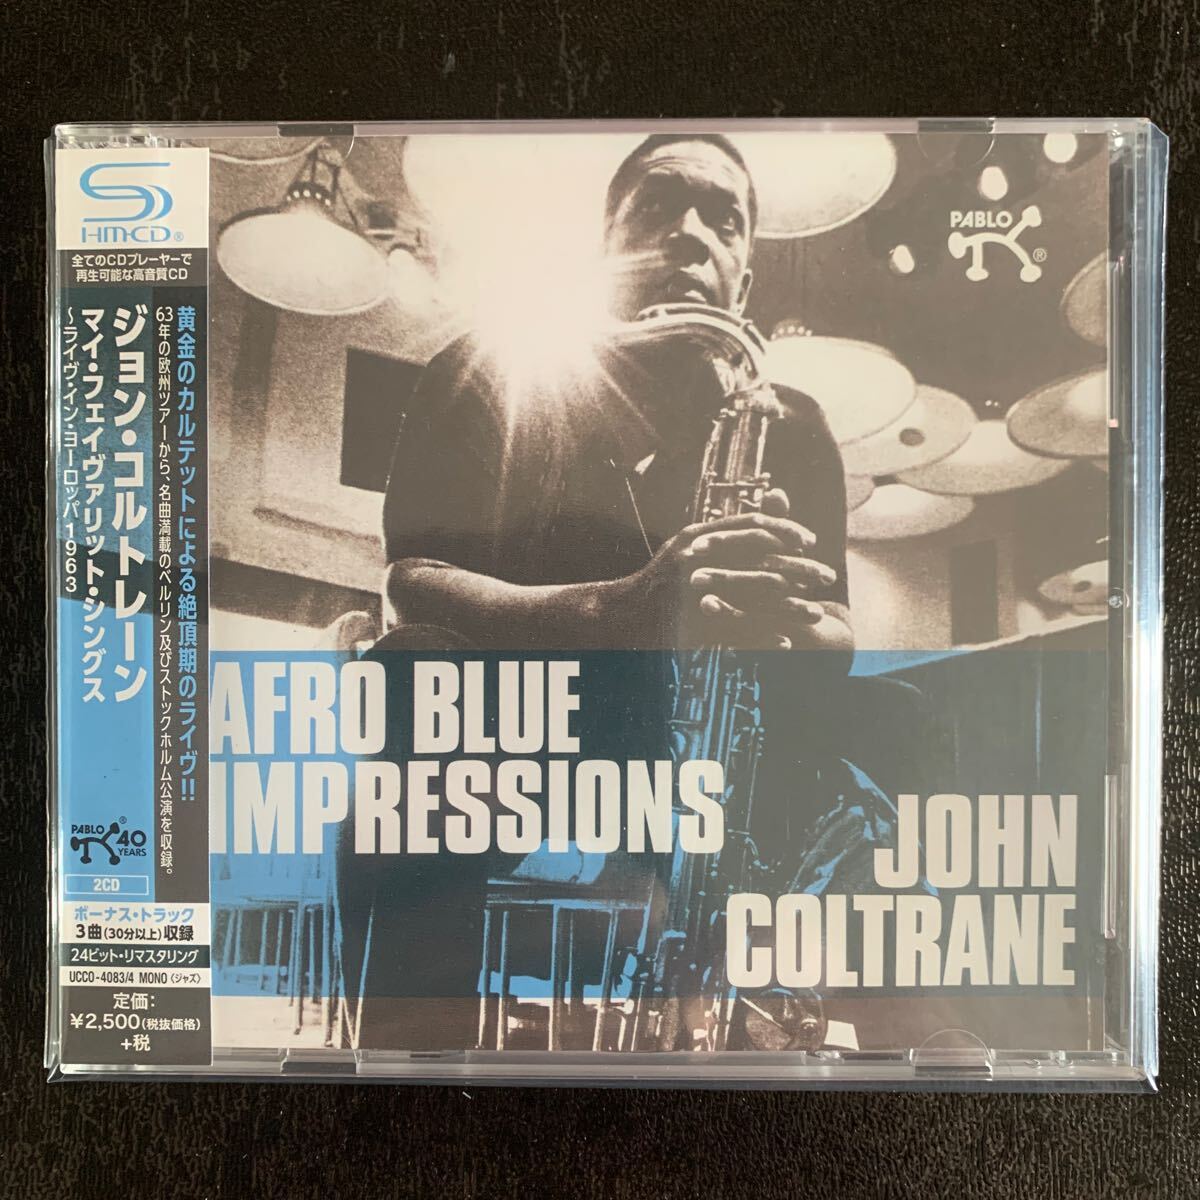 [ John *koru train (JOHN COLTRANE)| мой *feivalito* одиночный ~ жить * in * Europe 1963]CD=2 листов комплект | записано в Японии |SHM-CD